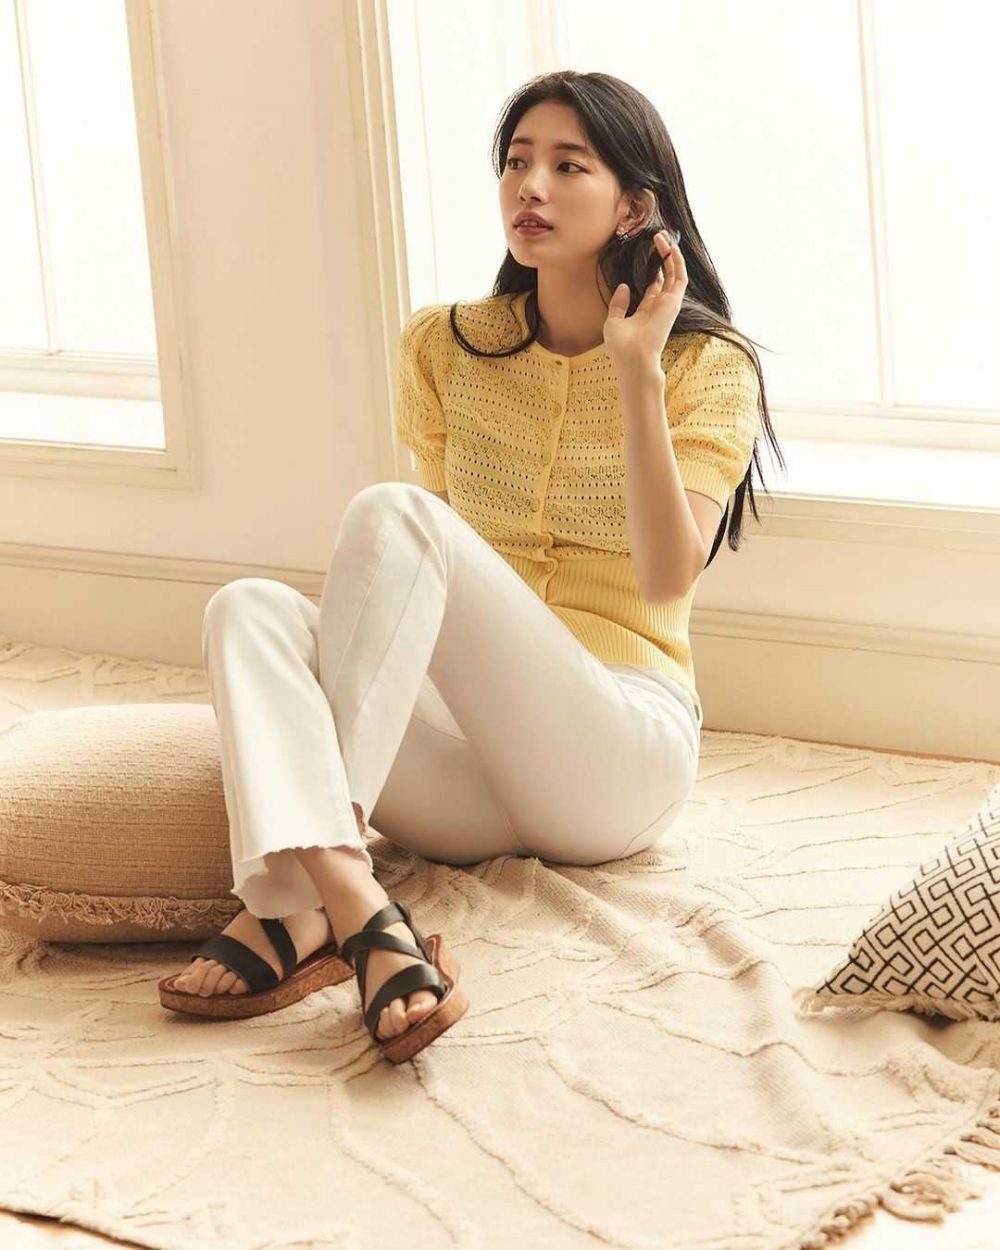 9 Ide Daily Look Outfit Ala Suzy, Korean Vibes yang Simple dan Cute